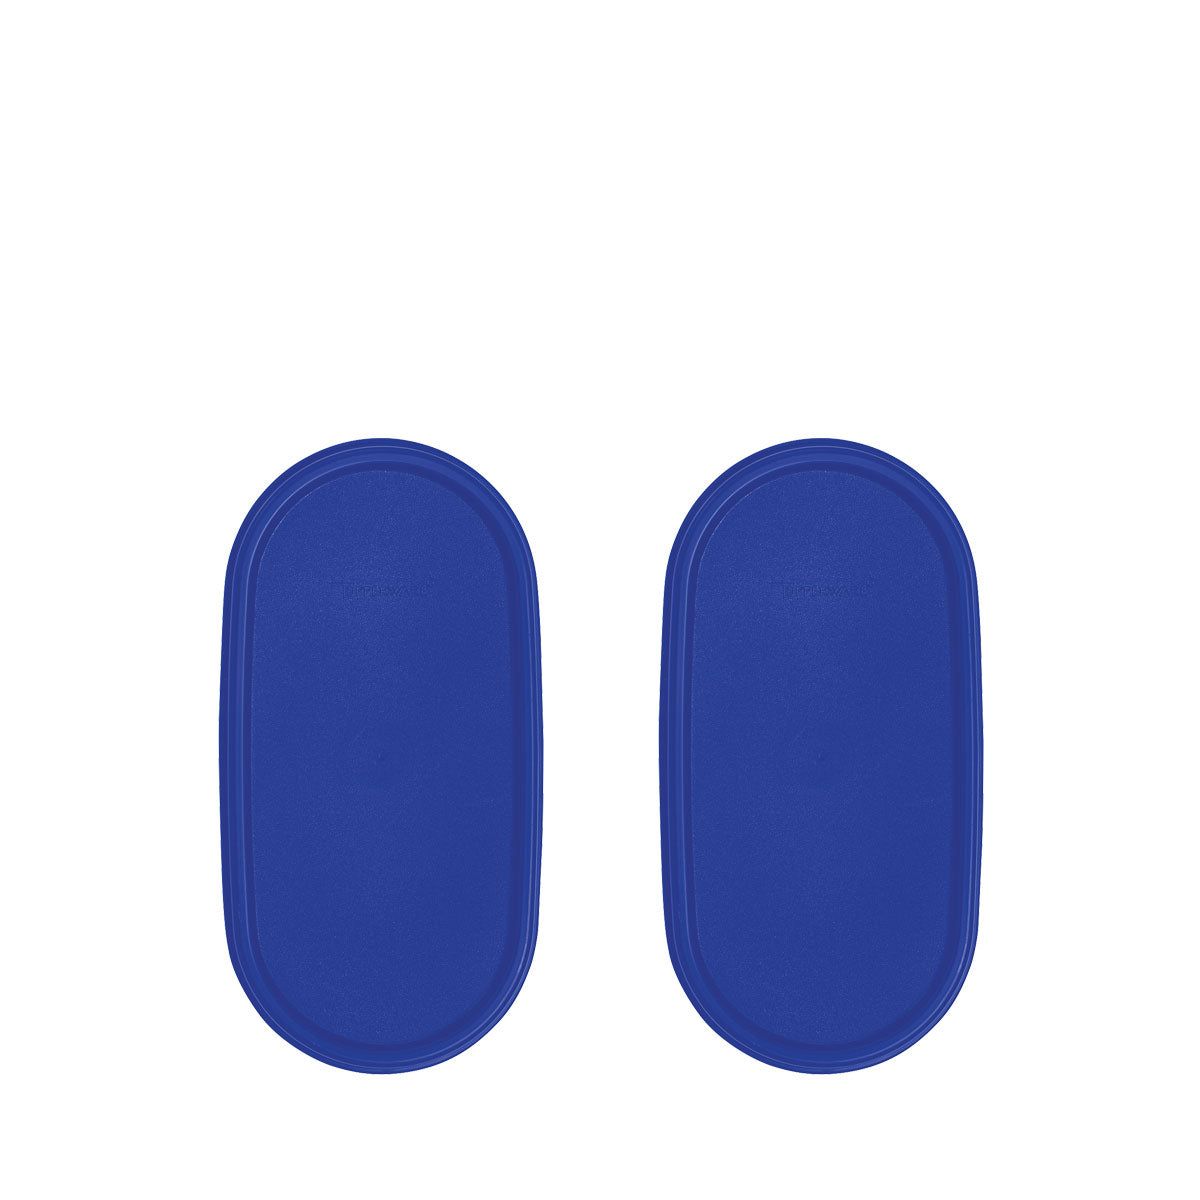 Modular Mates® Oval Seal-Klein Blue (lot de 2)